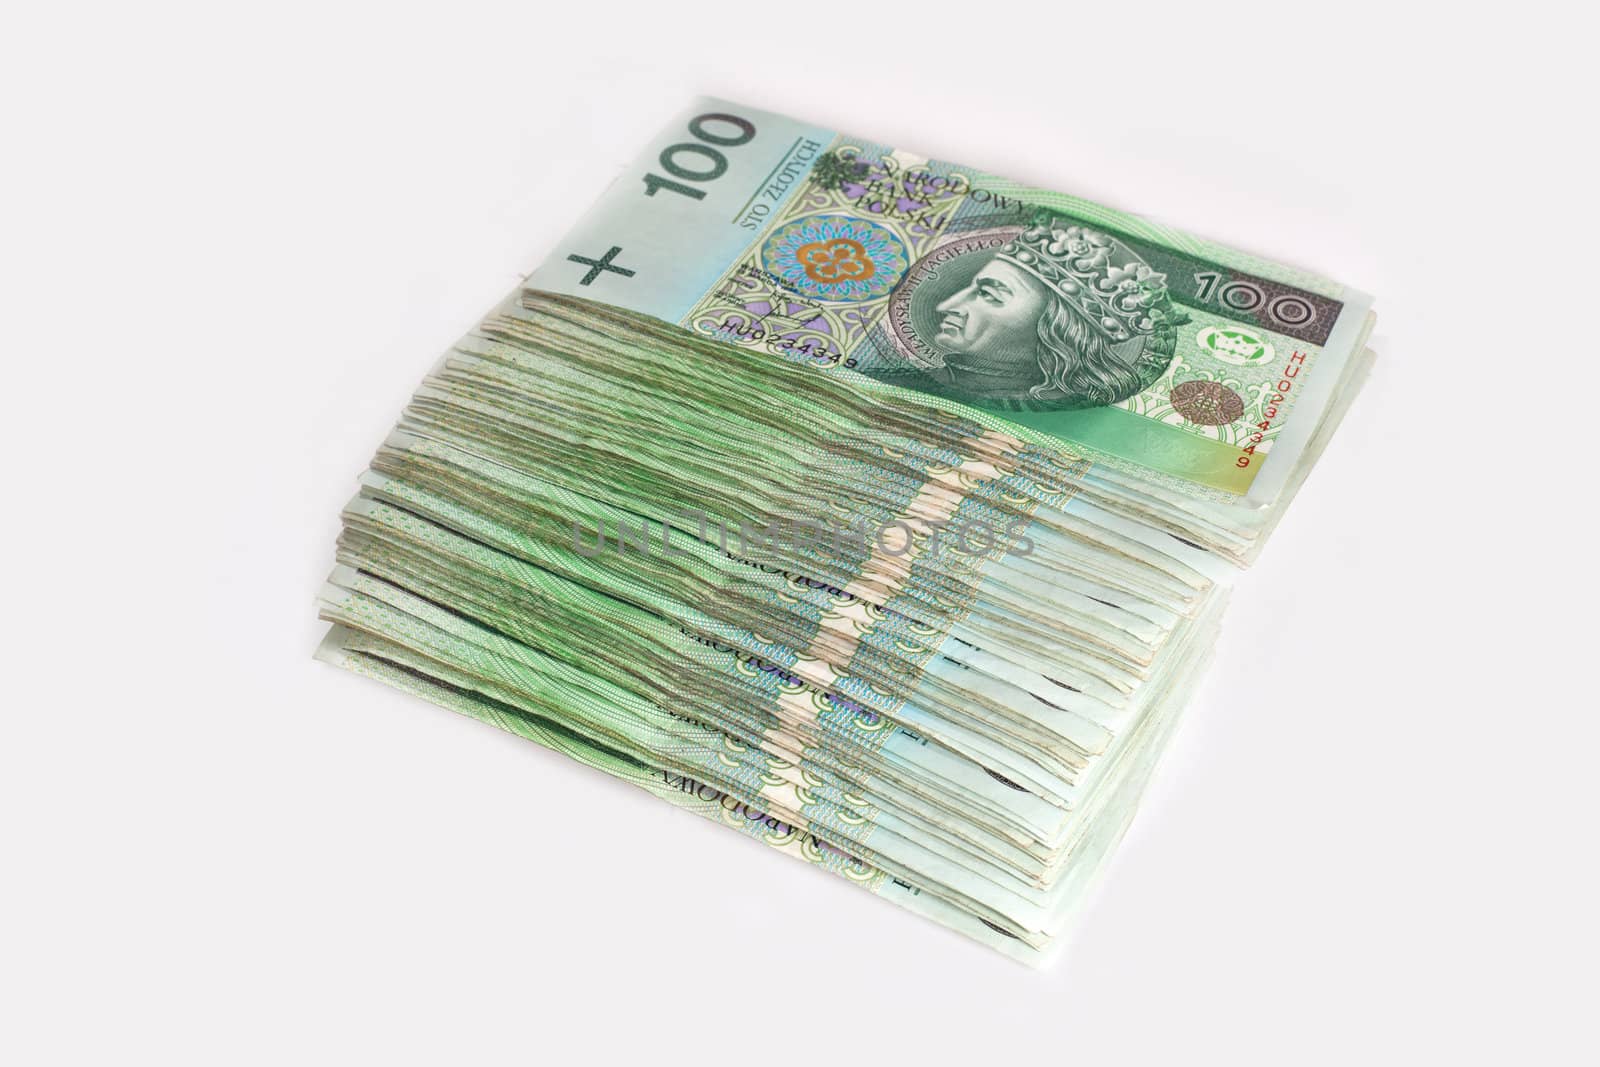 Polish money by remik44992